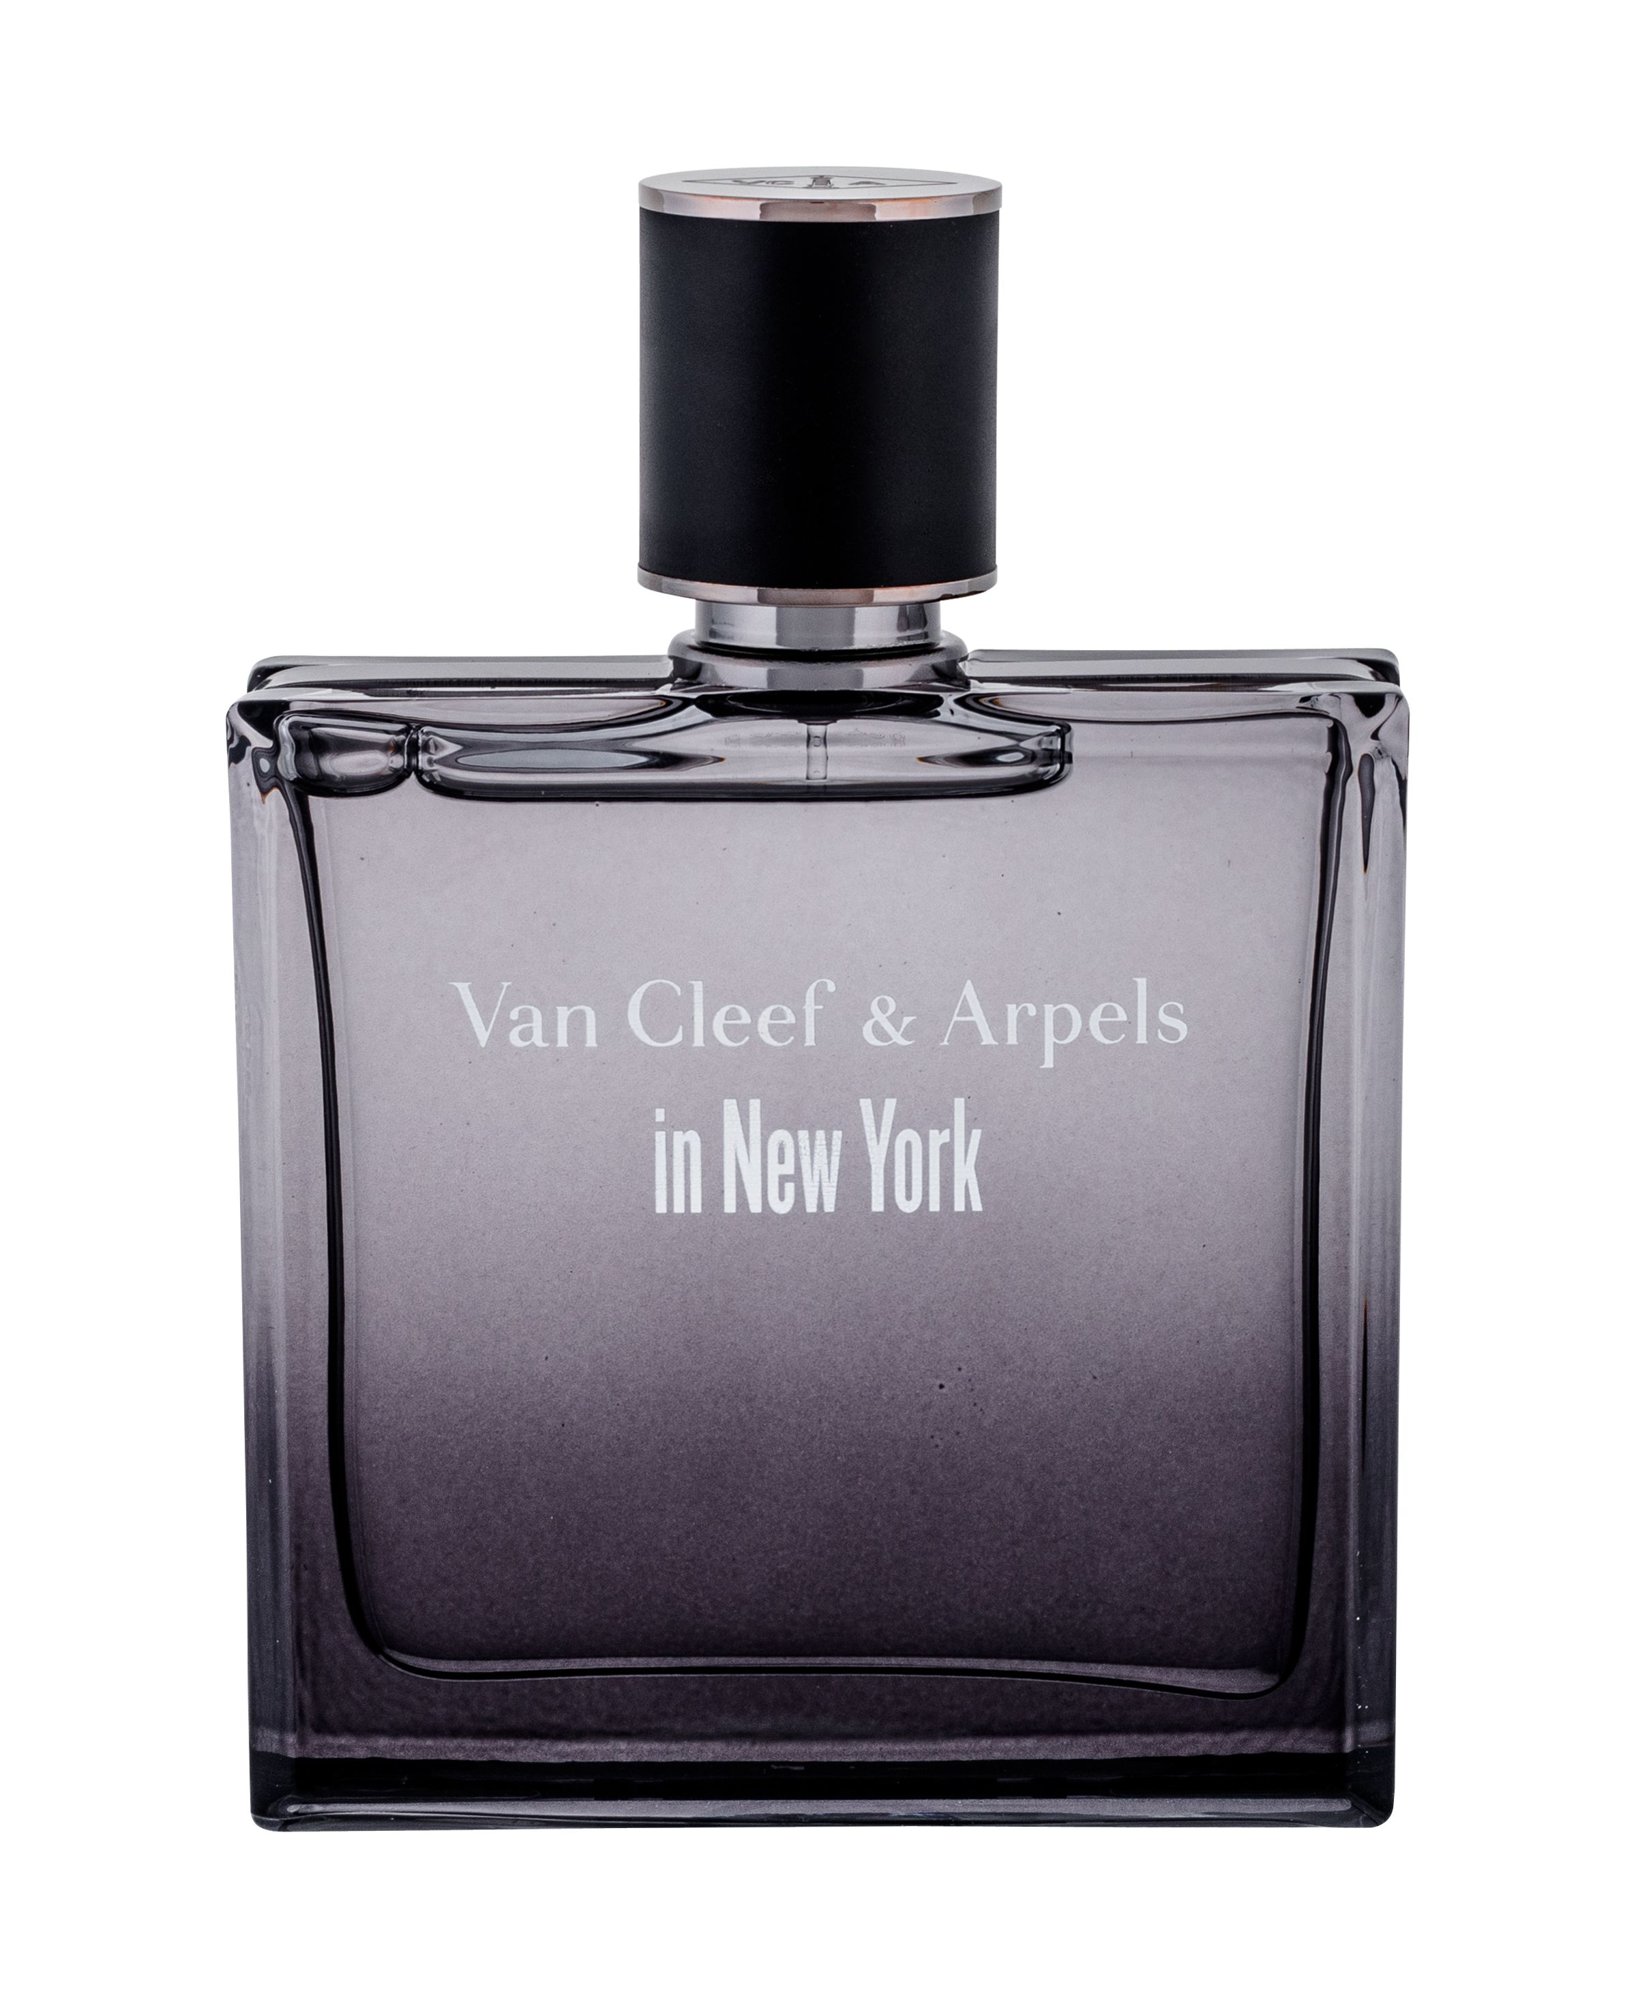 Van Cleef & Arpels In New York, edt 125ml